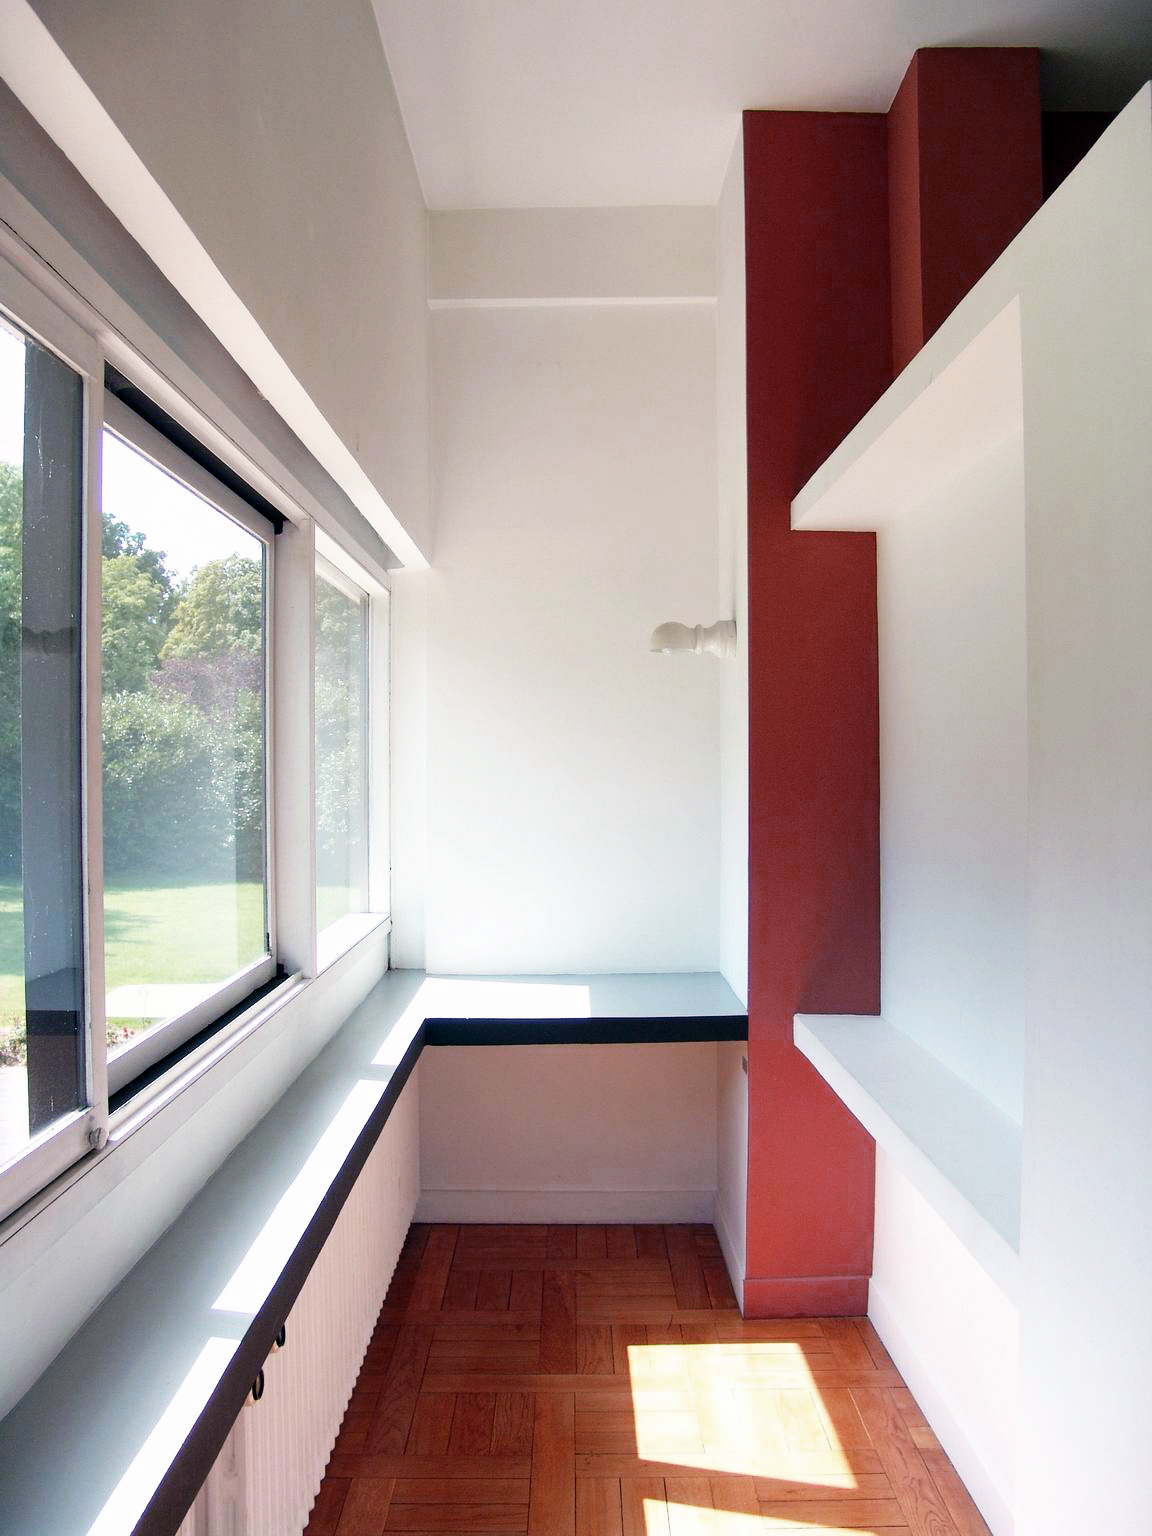 Office - Villa Savoye / Le Corbusier